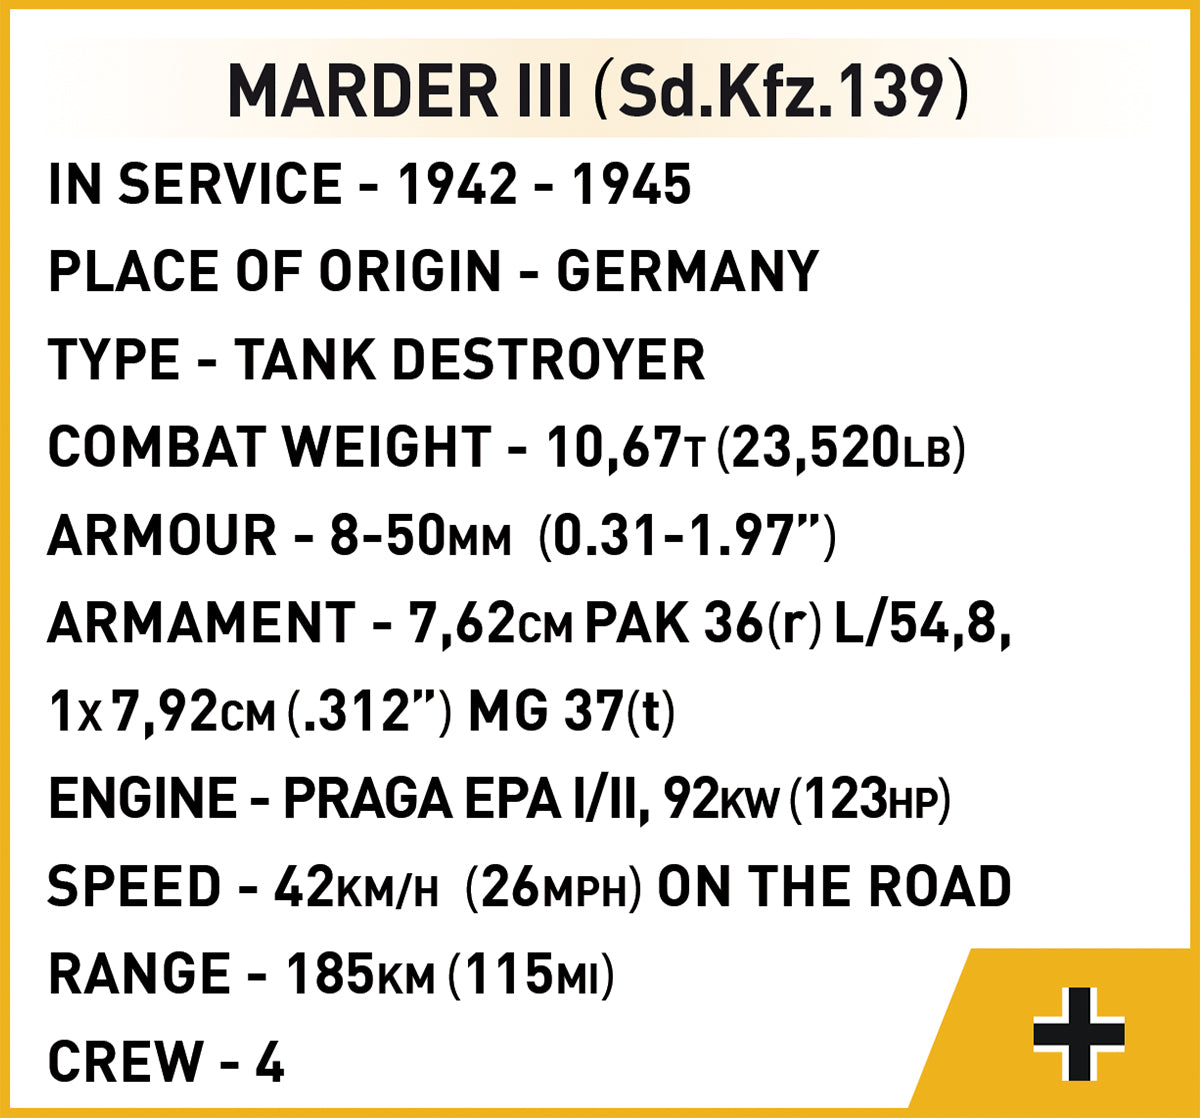 COBI Company of Heroes 3 MARDER III (Sd.Kfz. 139)